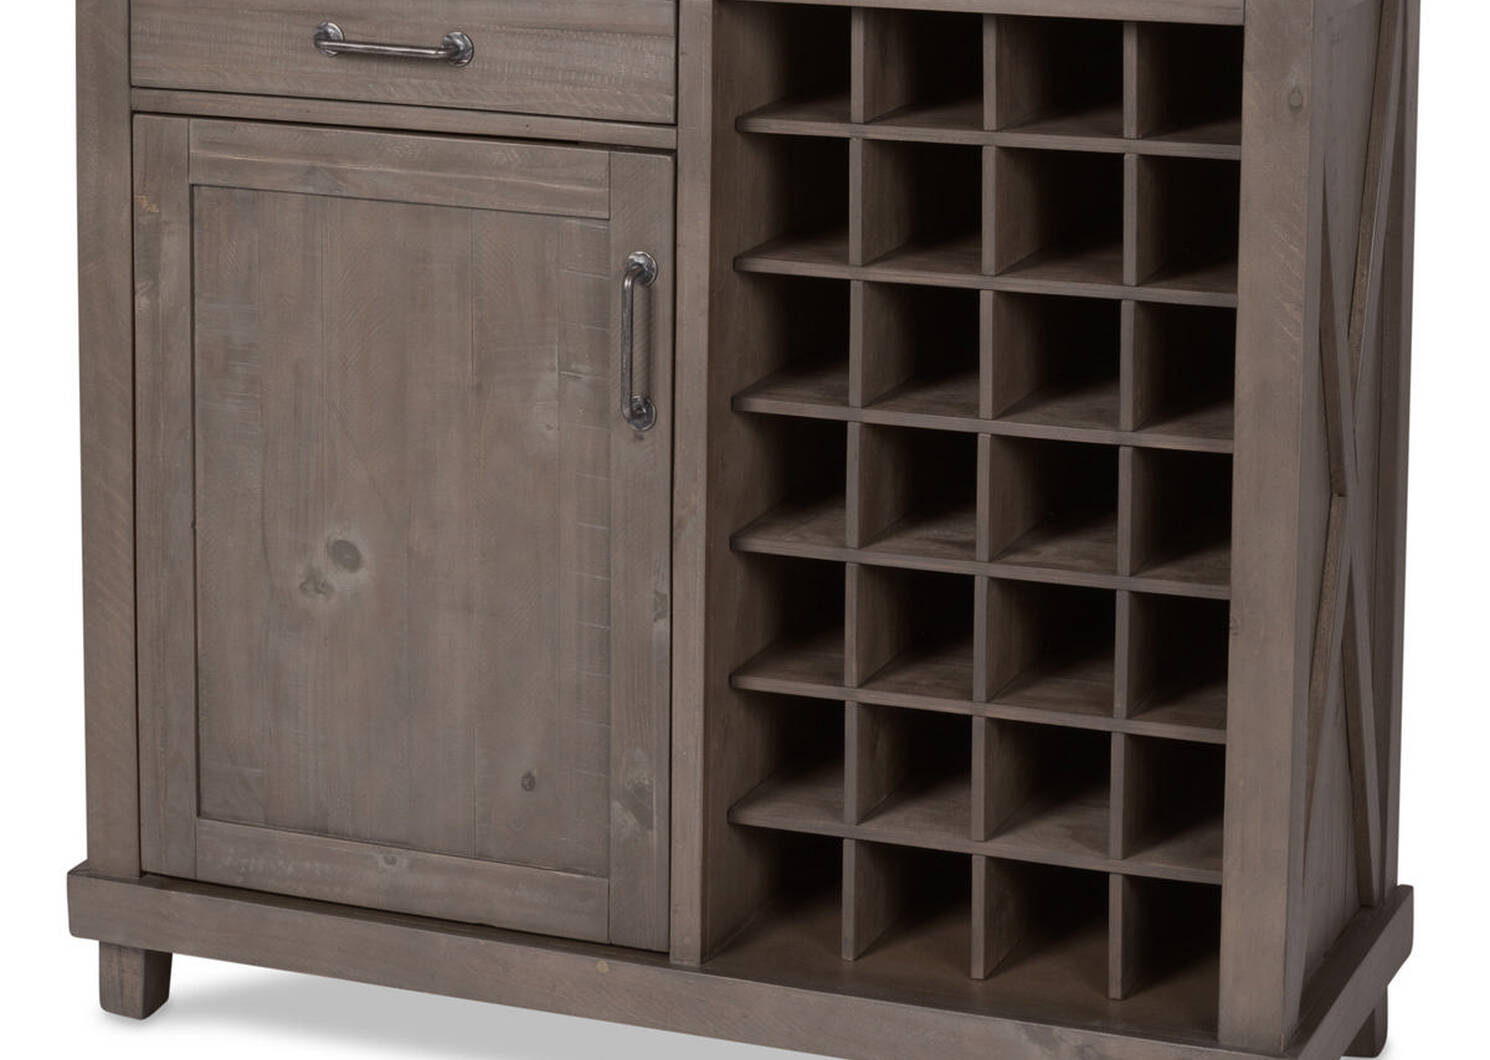 Ironside Wine Cabinet -Rustic Grey